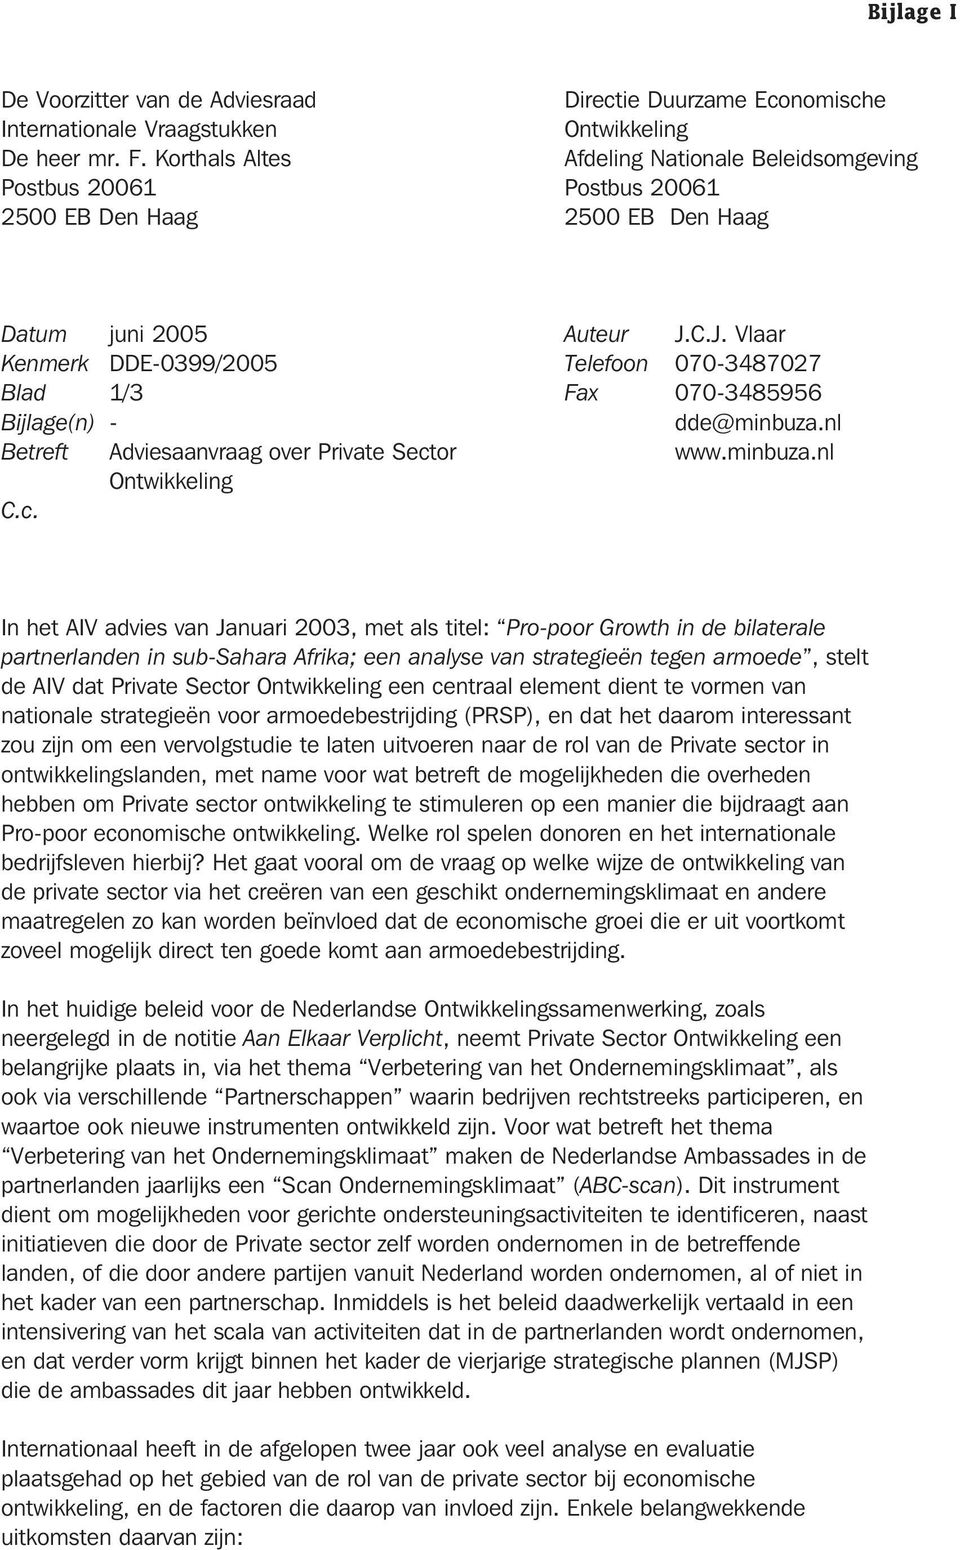 C.J. Vlaar Kenmerk DDE-0399/2005 Telefoon 070-3487027 Blad 1/3 Fax 070-3485956 Bijlage(n) - dde@minbuza.nl Betreft Adviesaanvraag over Private Sect